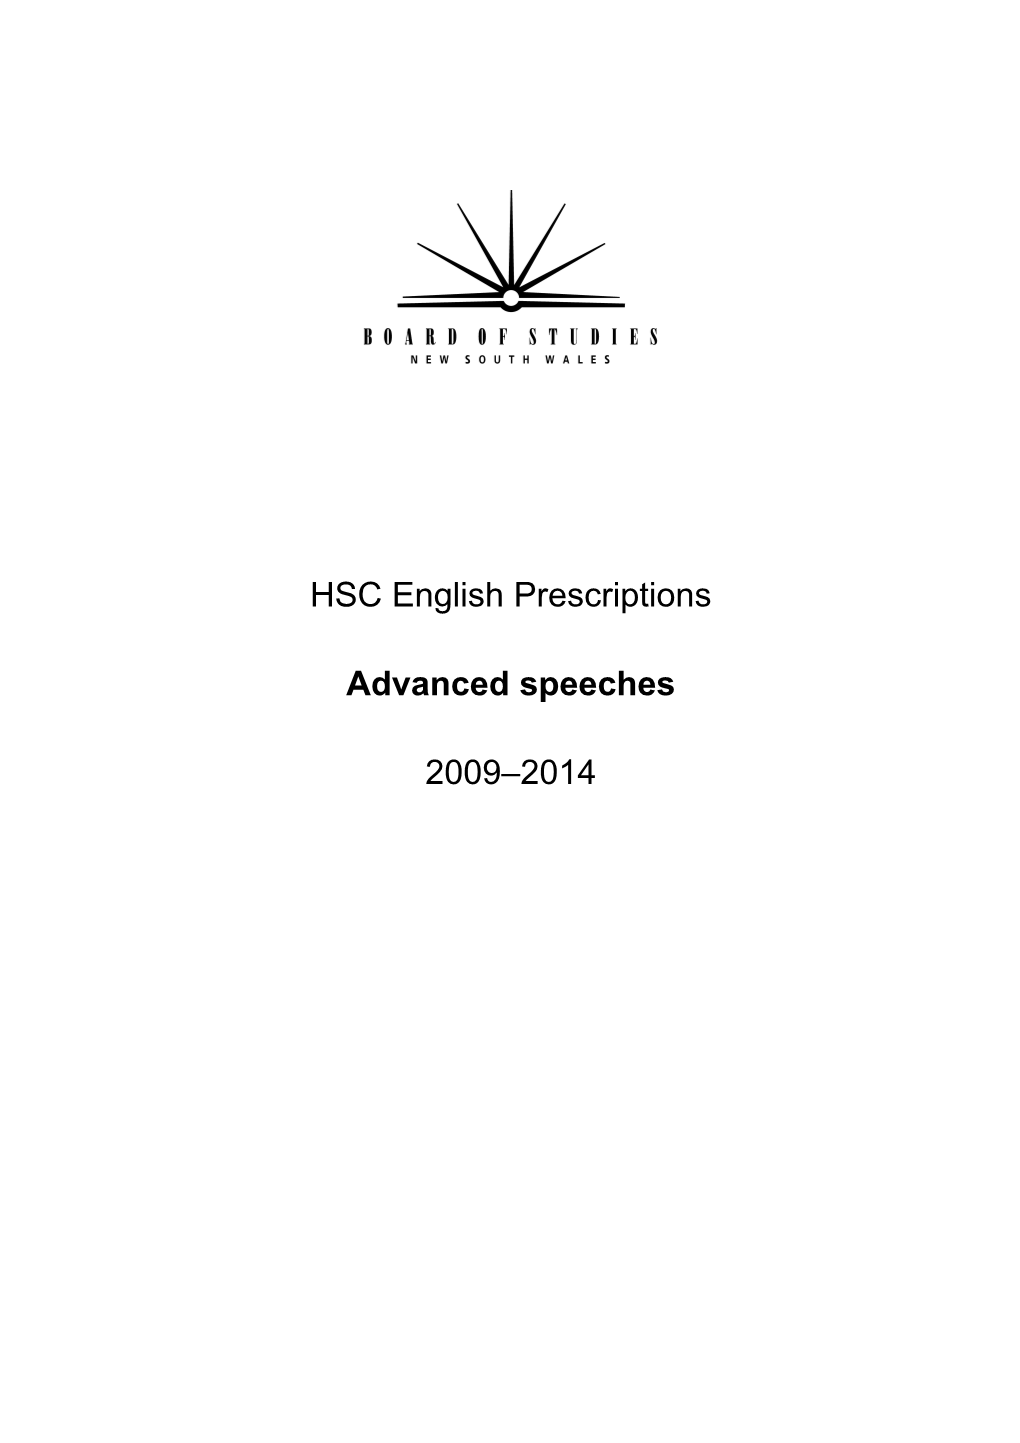 HSC English Prescriptions Advanced Speeches